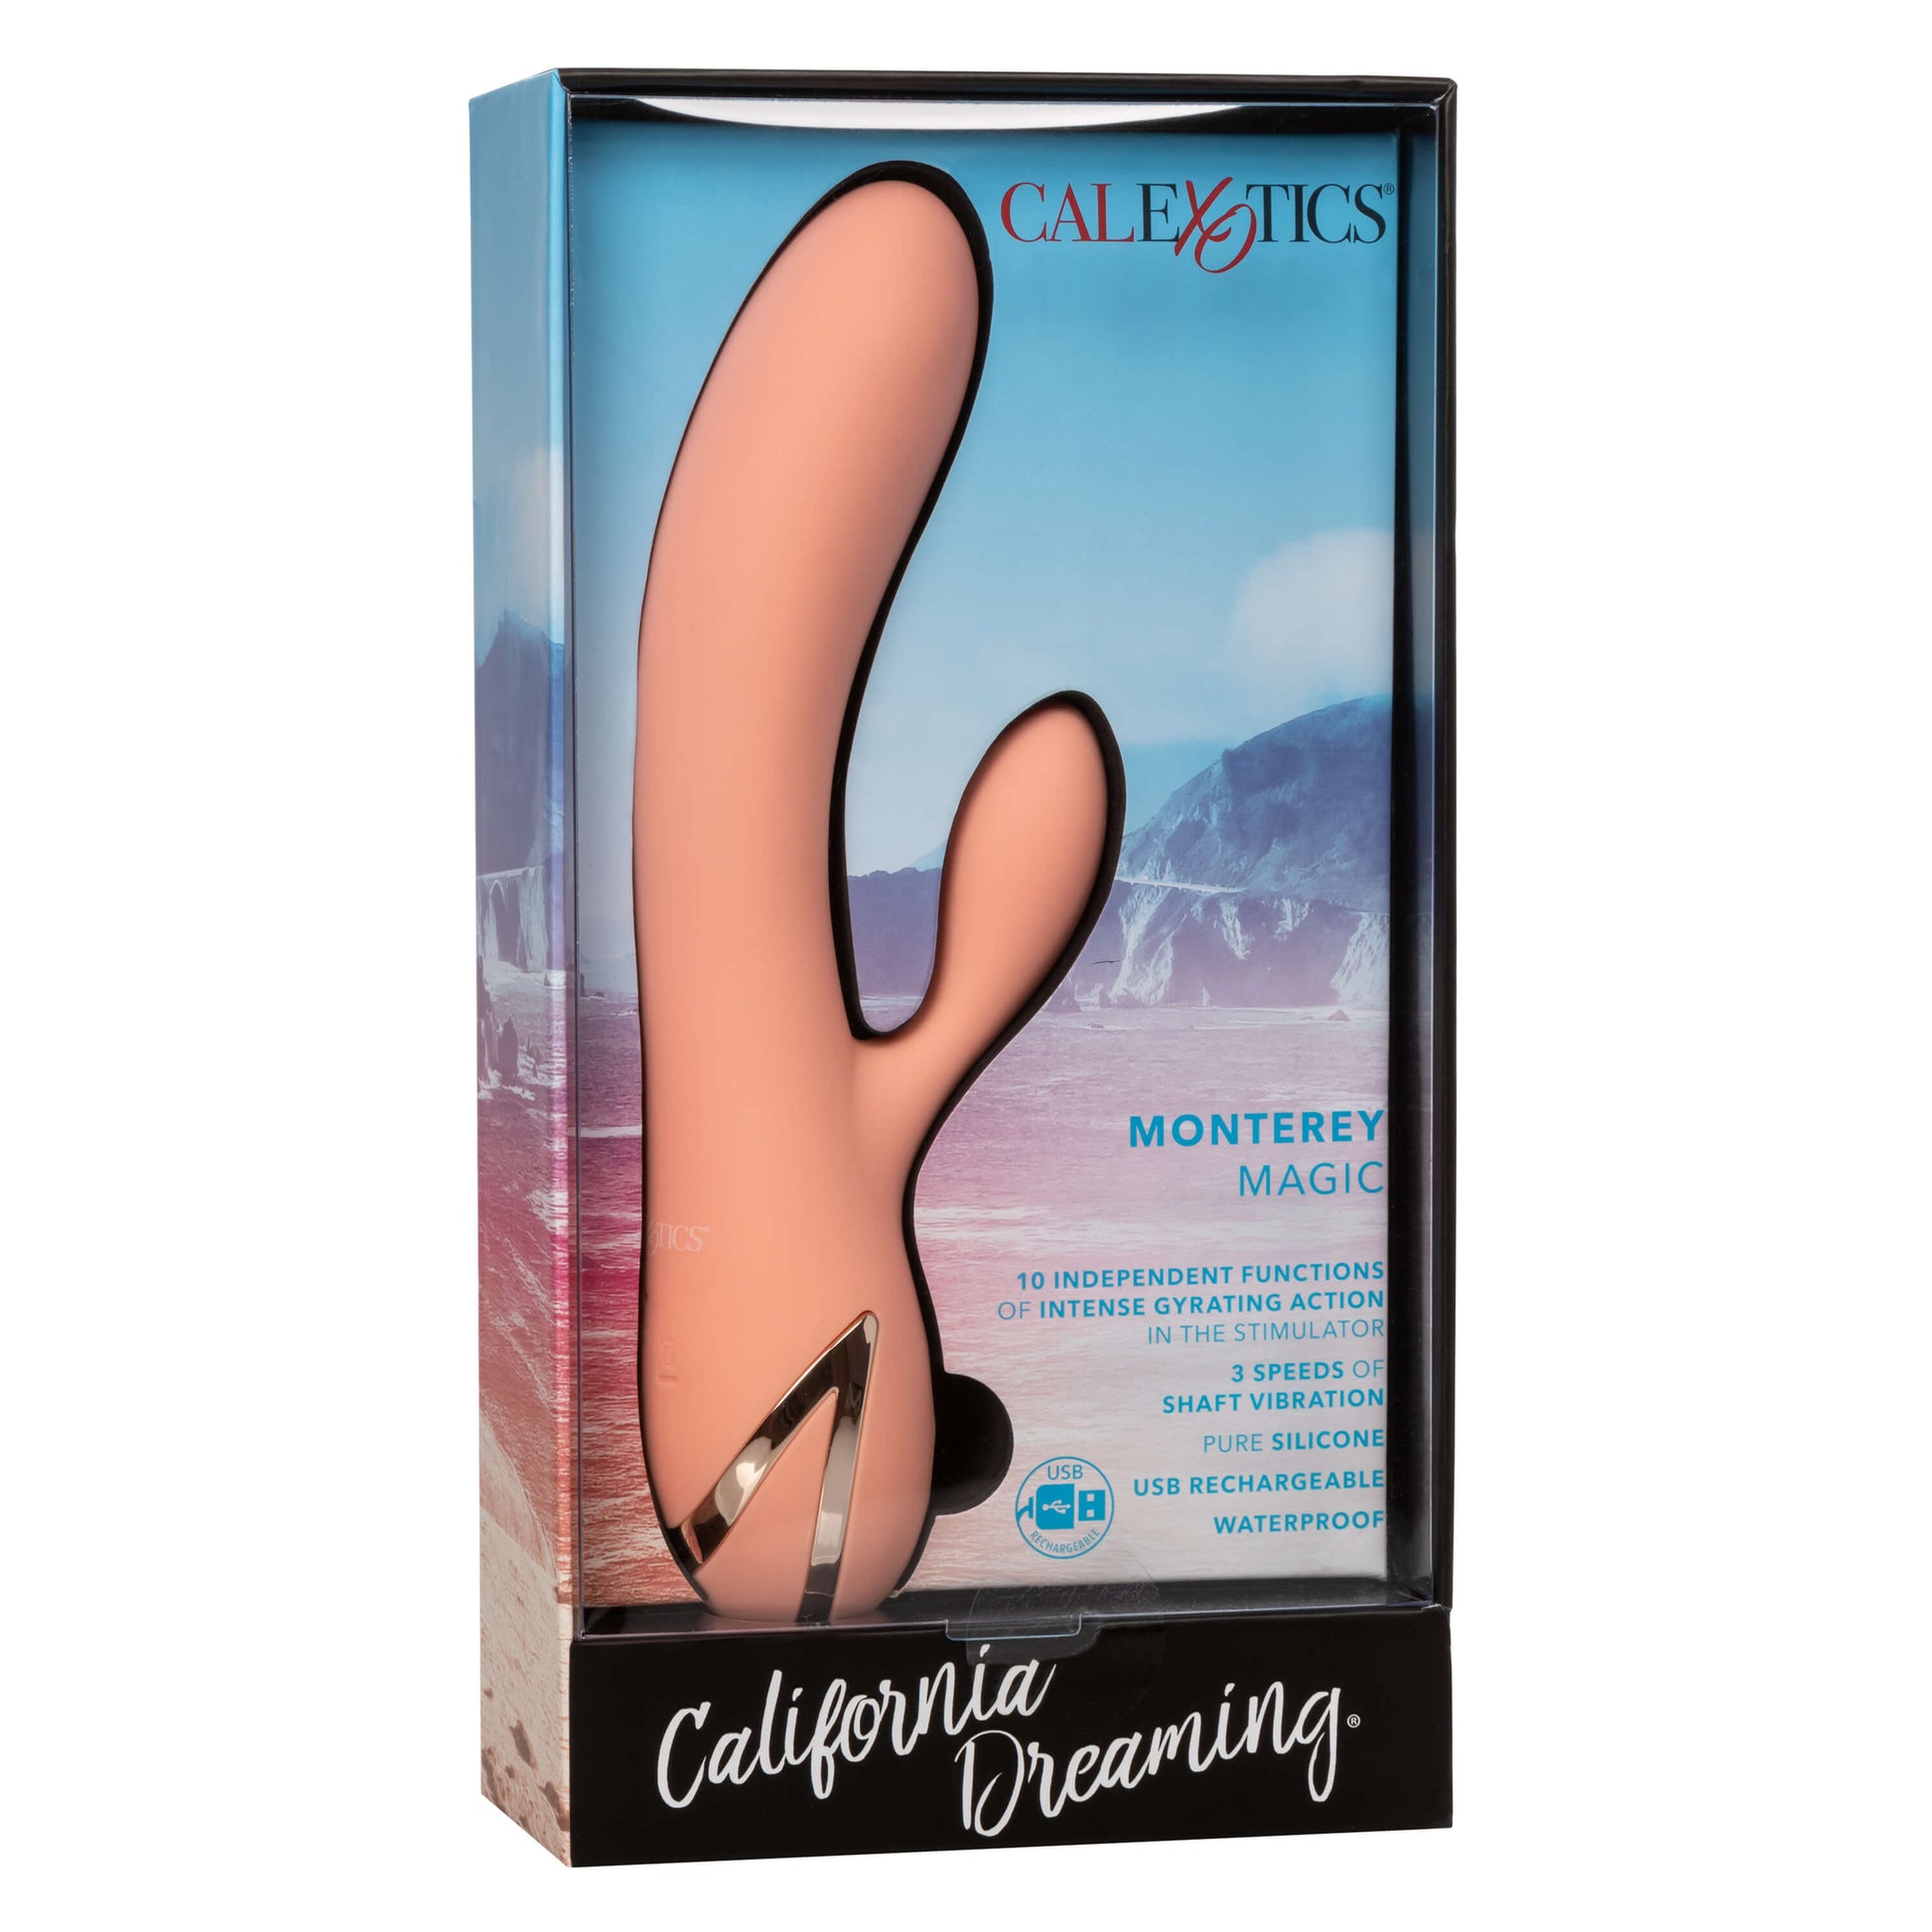 CalExotics California Dreaming Monterey Magic - The Bigger O - online sex toy shop USA, Canada & UK shipping available